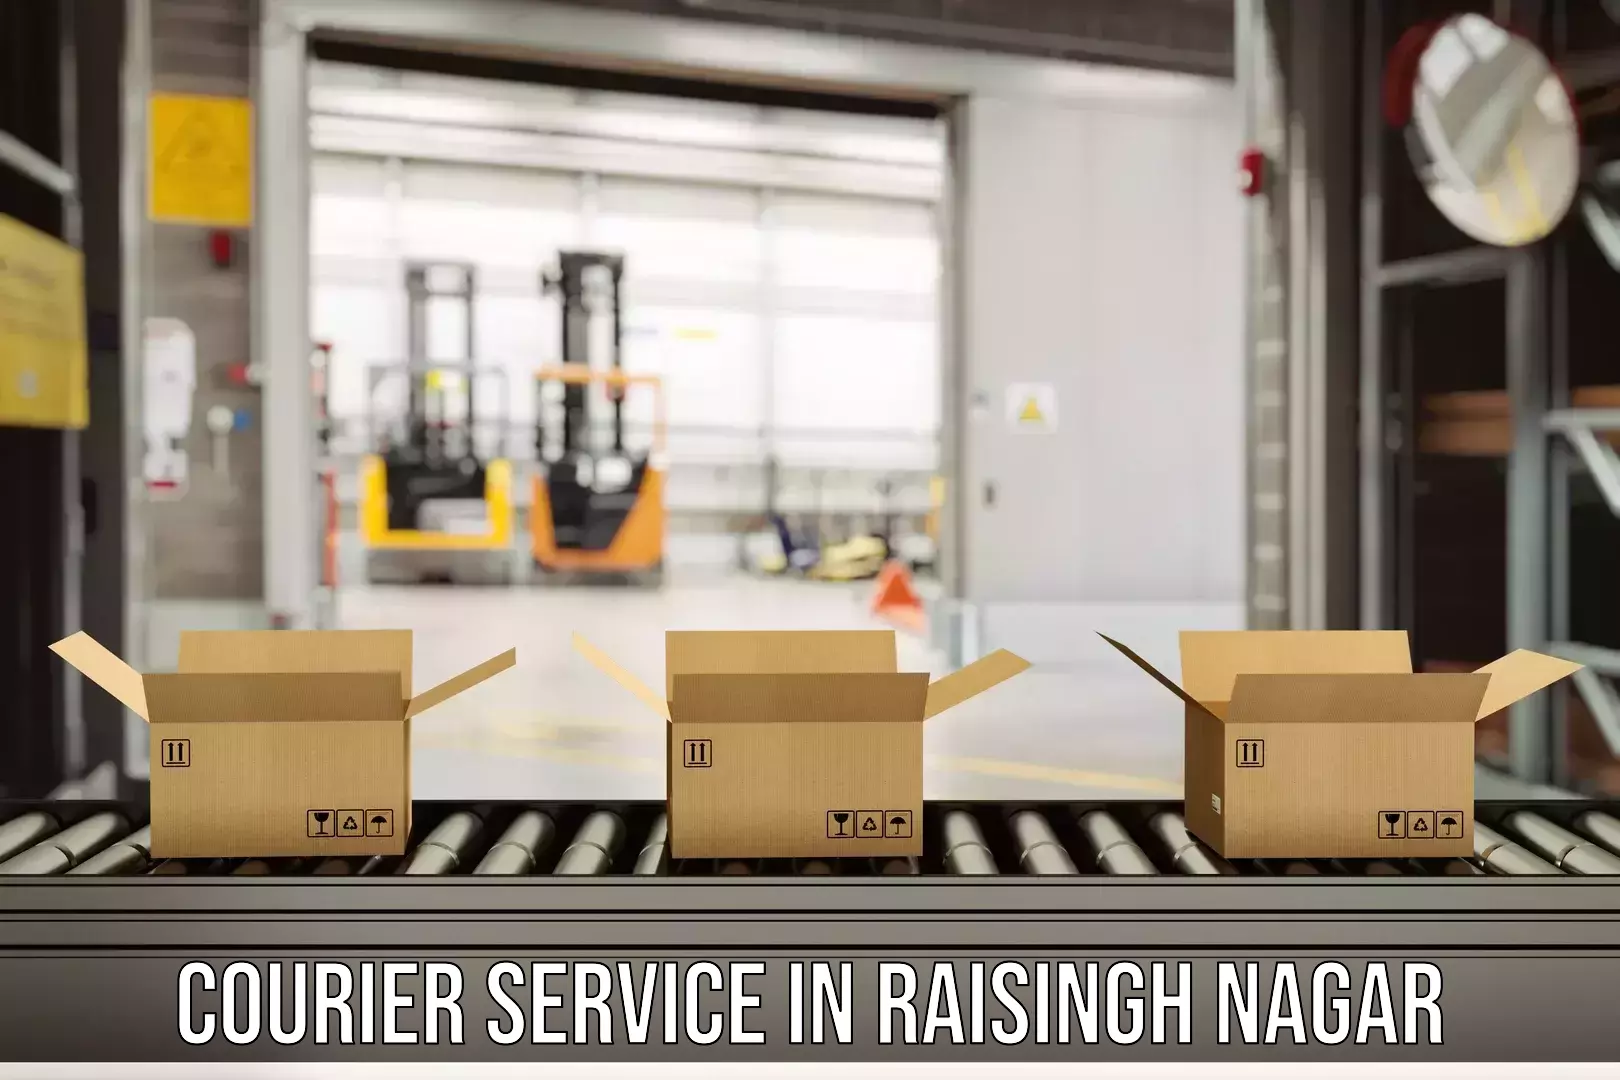 Nationwide delivery network in Raisingh Nagar